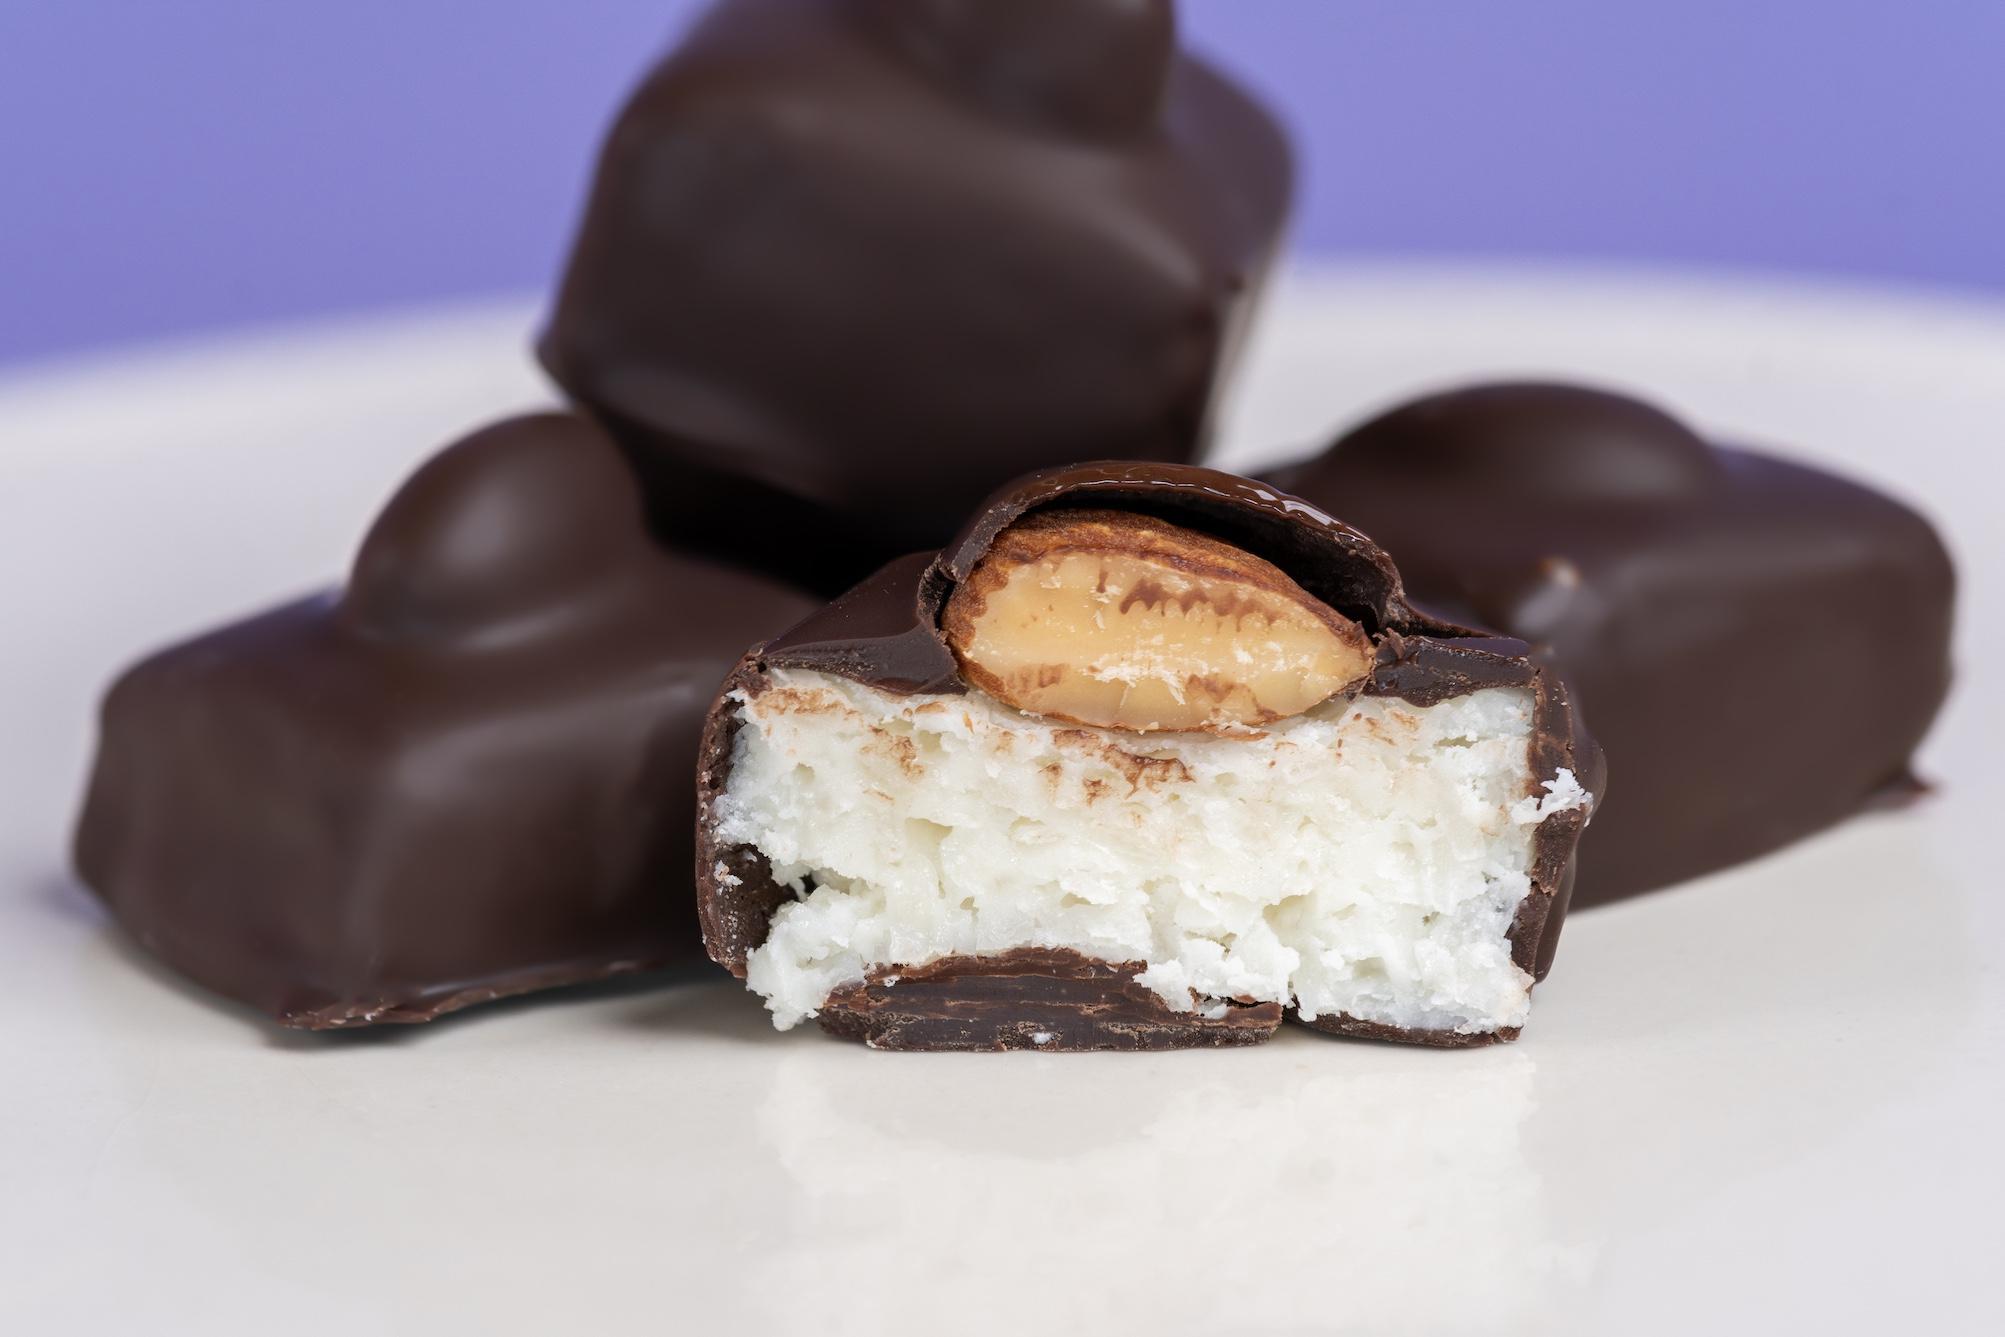 Dark Chocolate Coconut Almond Joy Bites